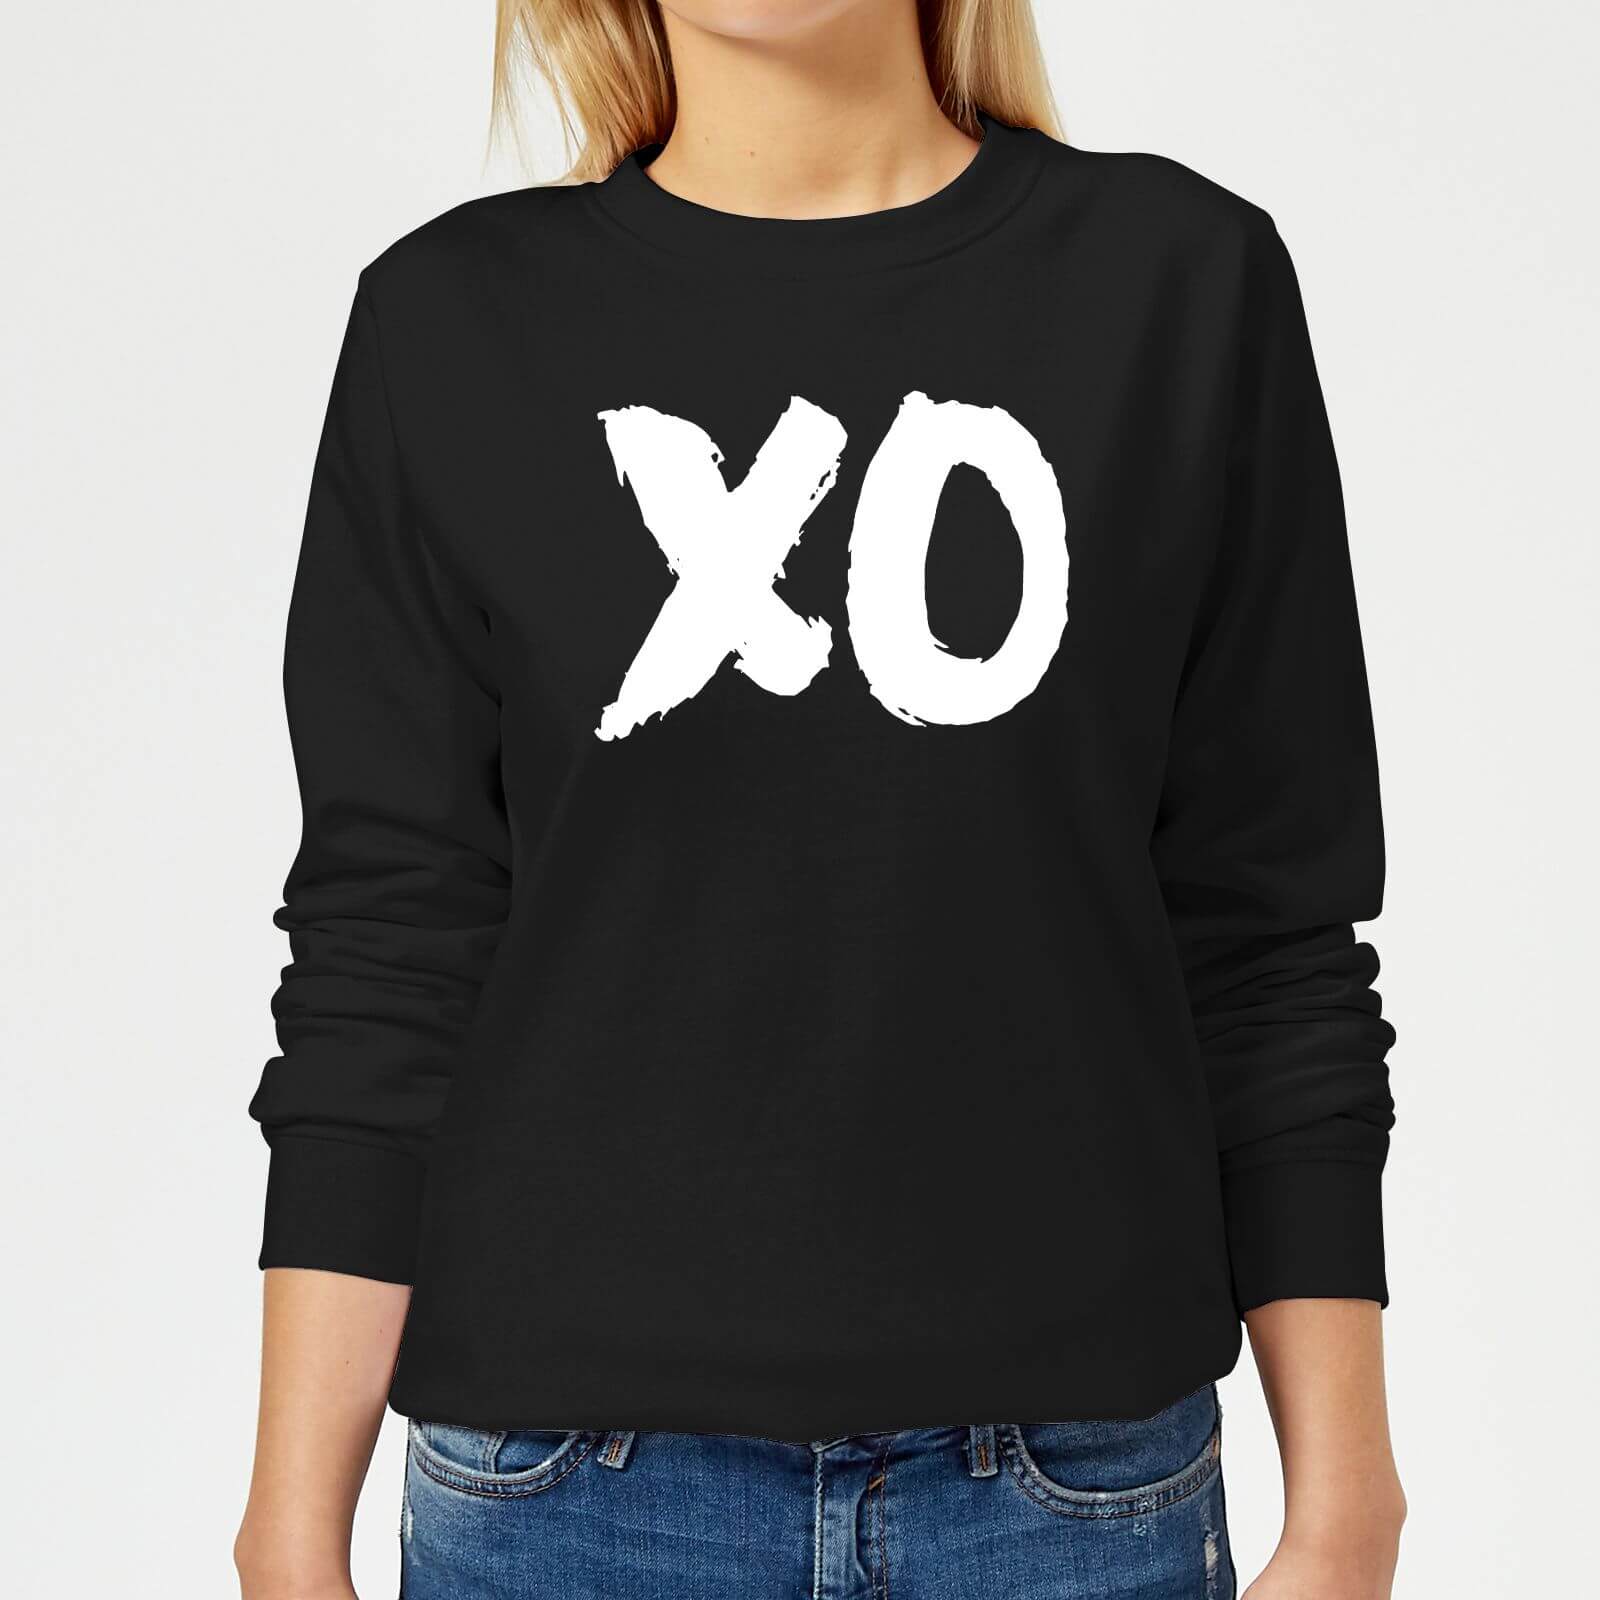 The Motivated Type XO Women's Sweatshirt - Black - XS - Black